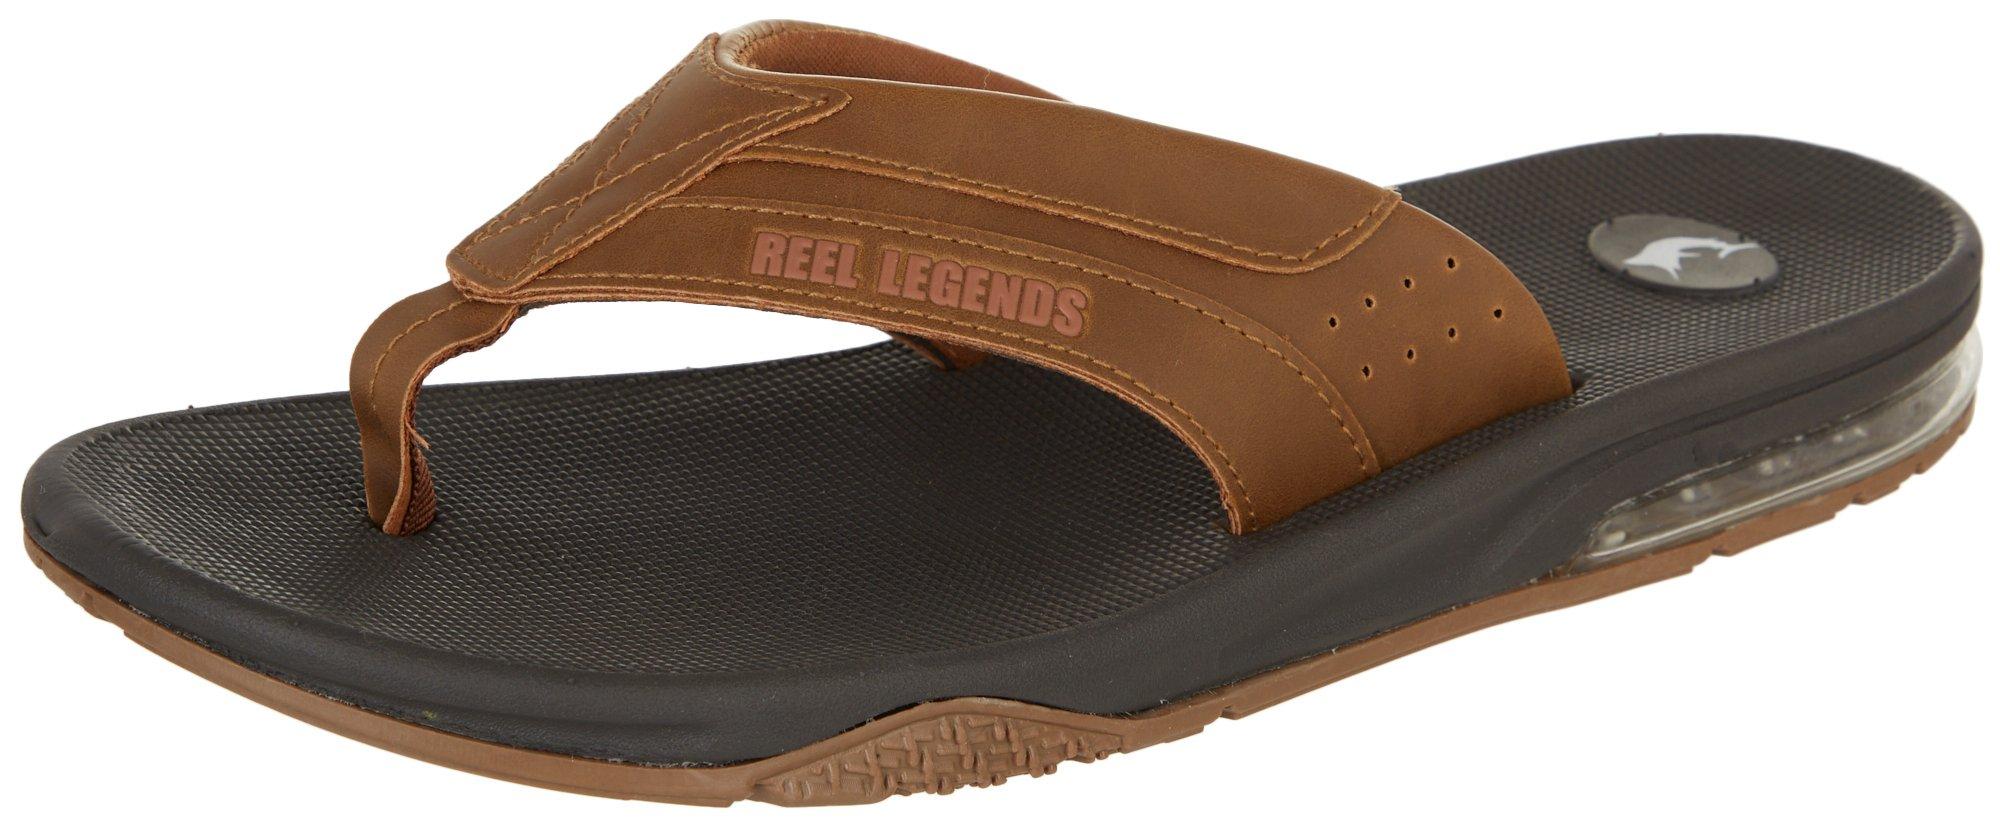 Reel Legends Rebound Flip Flops Thongs Sandals Shoes Molded Rubber Black M  6 W 8